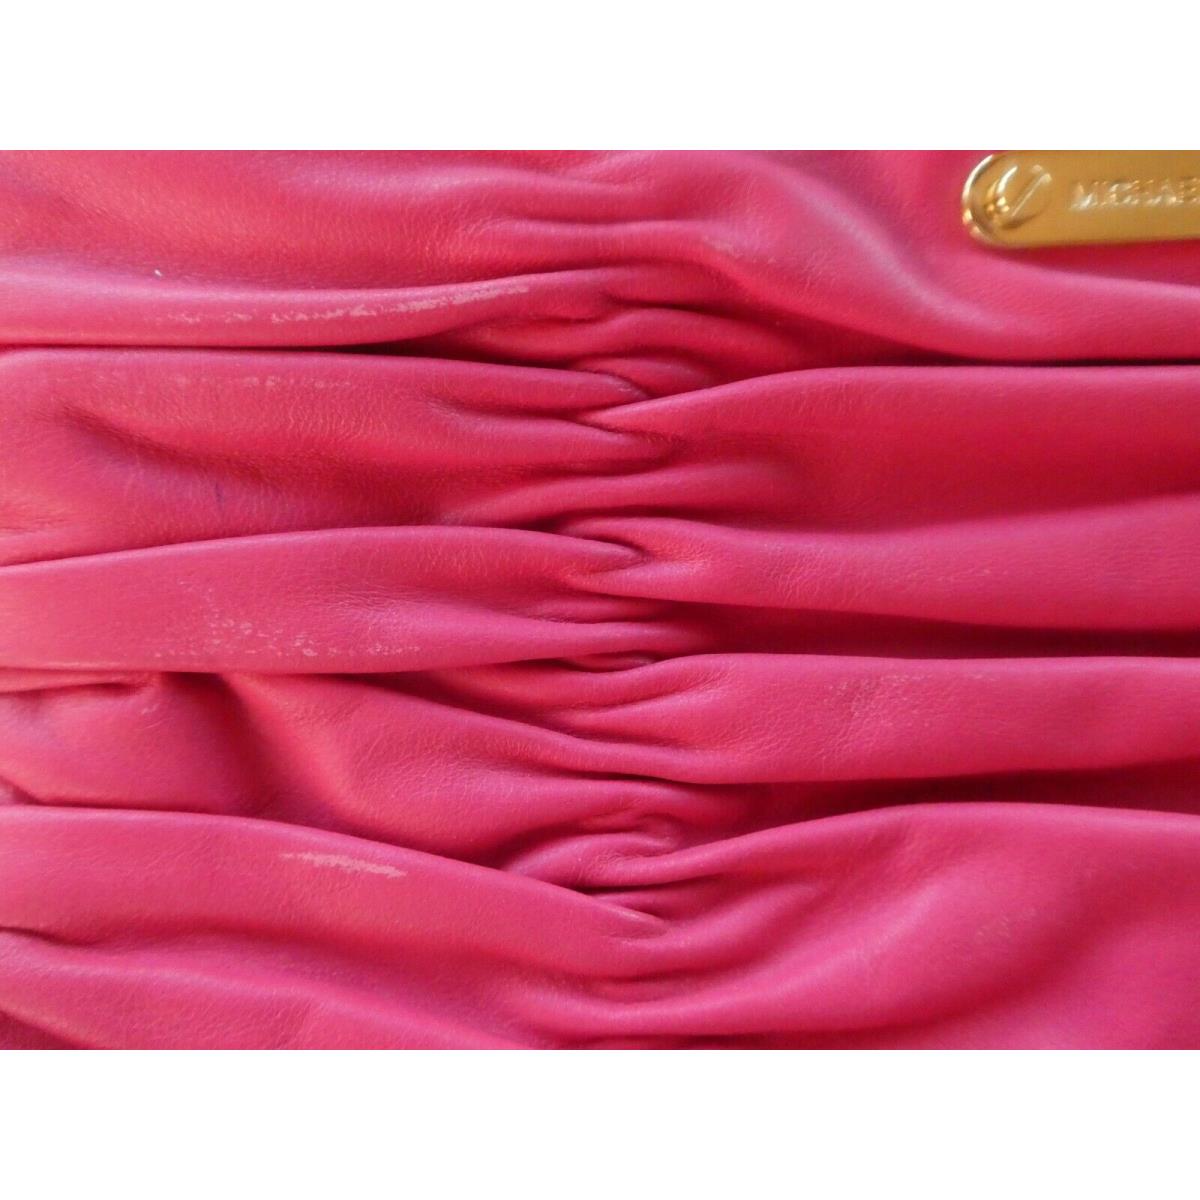 Michael Kors wallet  - Pink